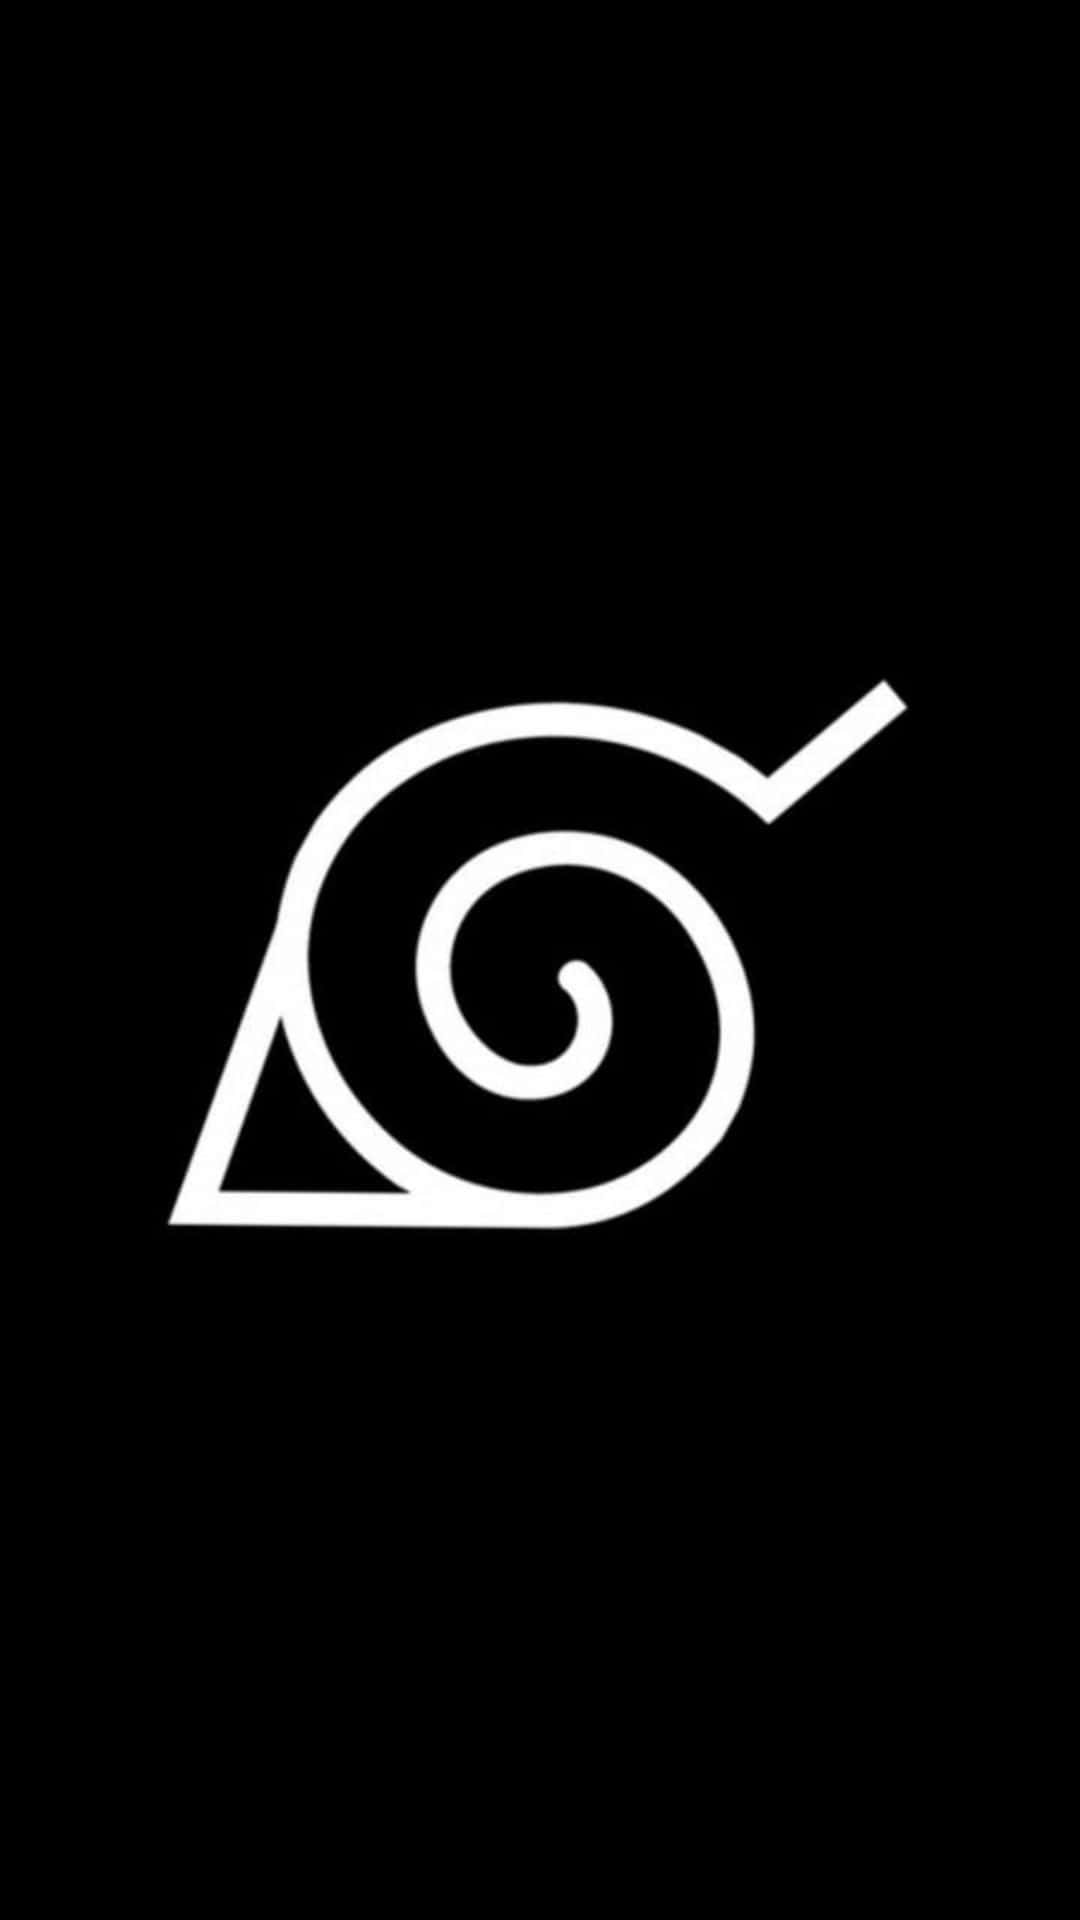 Narutokonoha-logo In Schwarz-weiß. Wallpaper